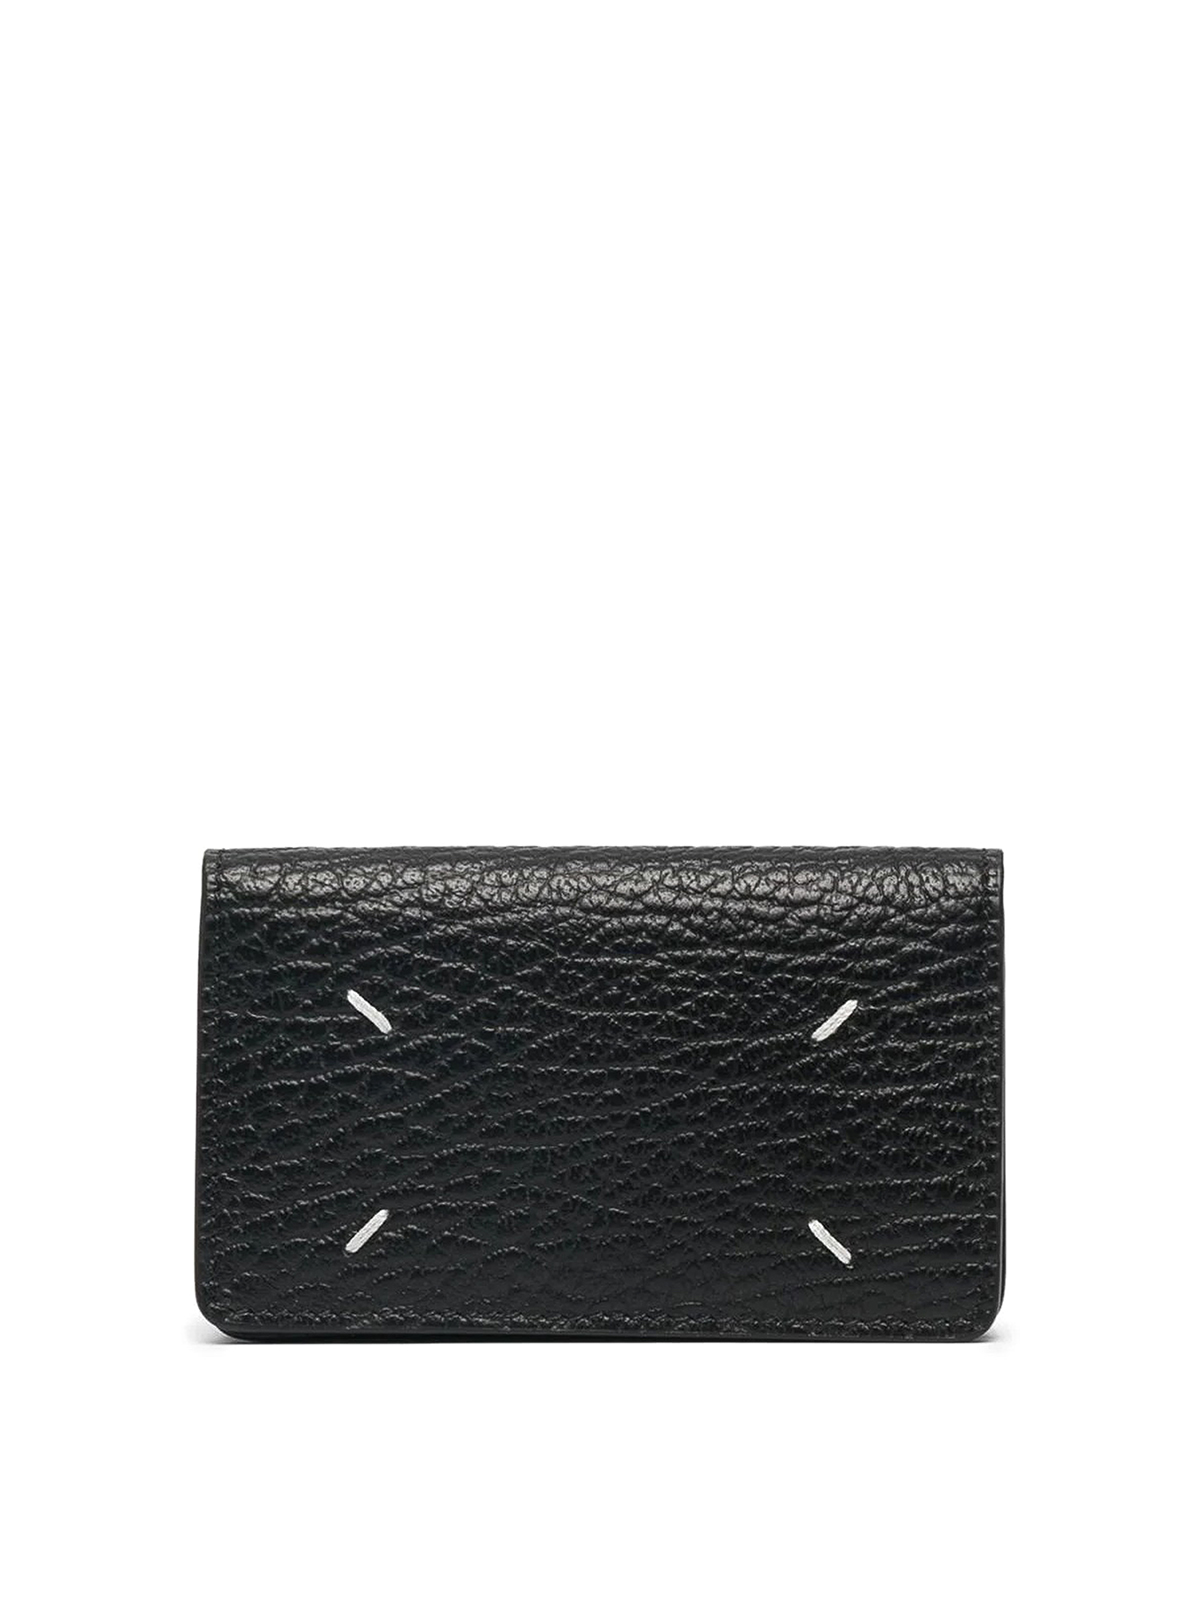 Maison Margiela Grained Leather Wallet In Black